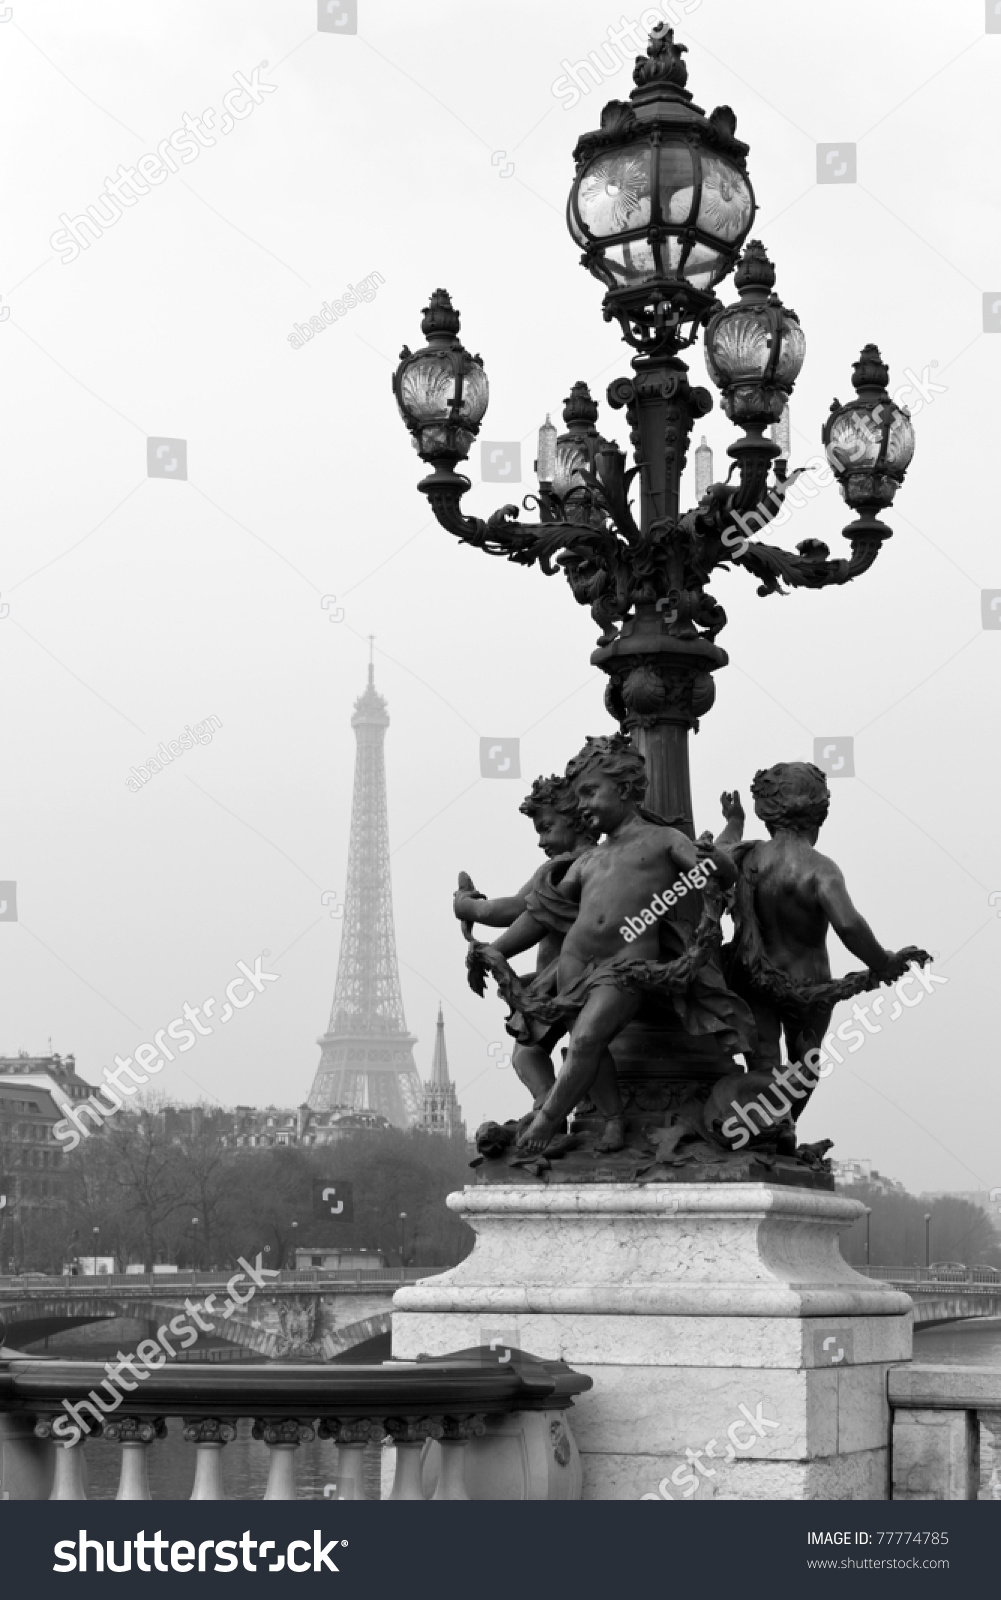 Street Lantern On The Alexandre Iii Bridge Against The Eiffel Tower In ...